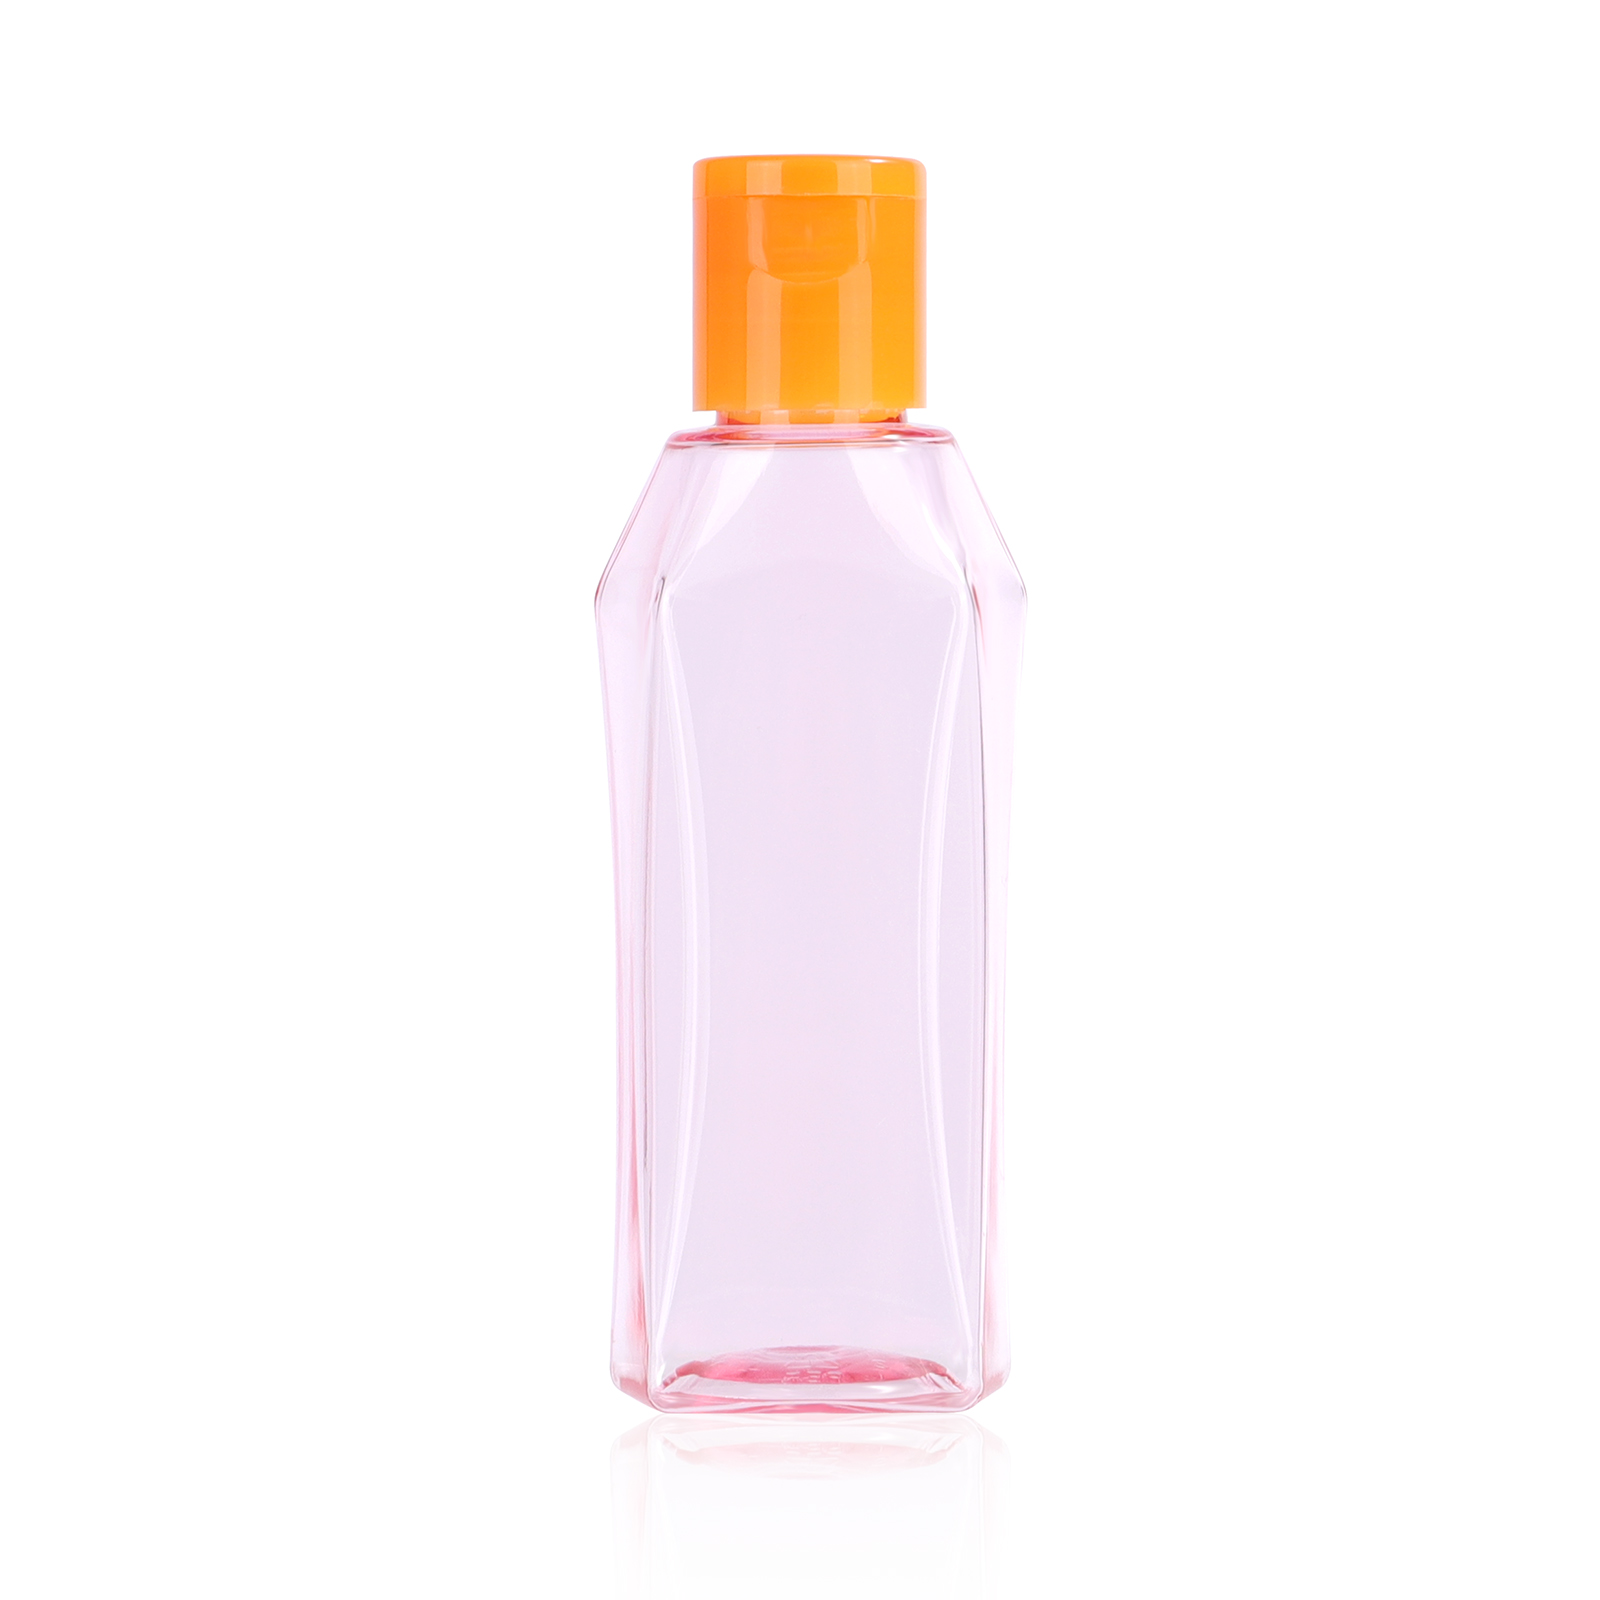 150ml empty custom made PET plastic bottle/ essential oil/body lotion/shower gel bottle